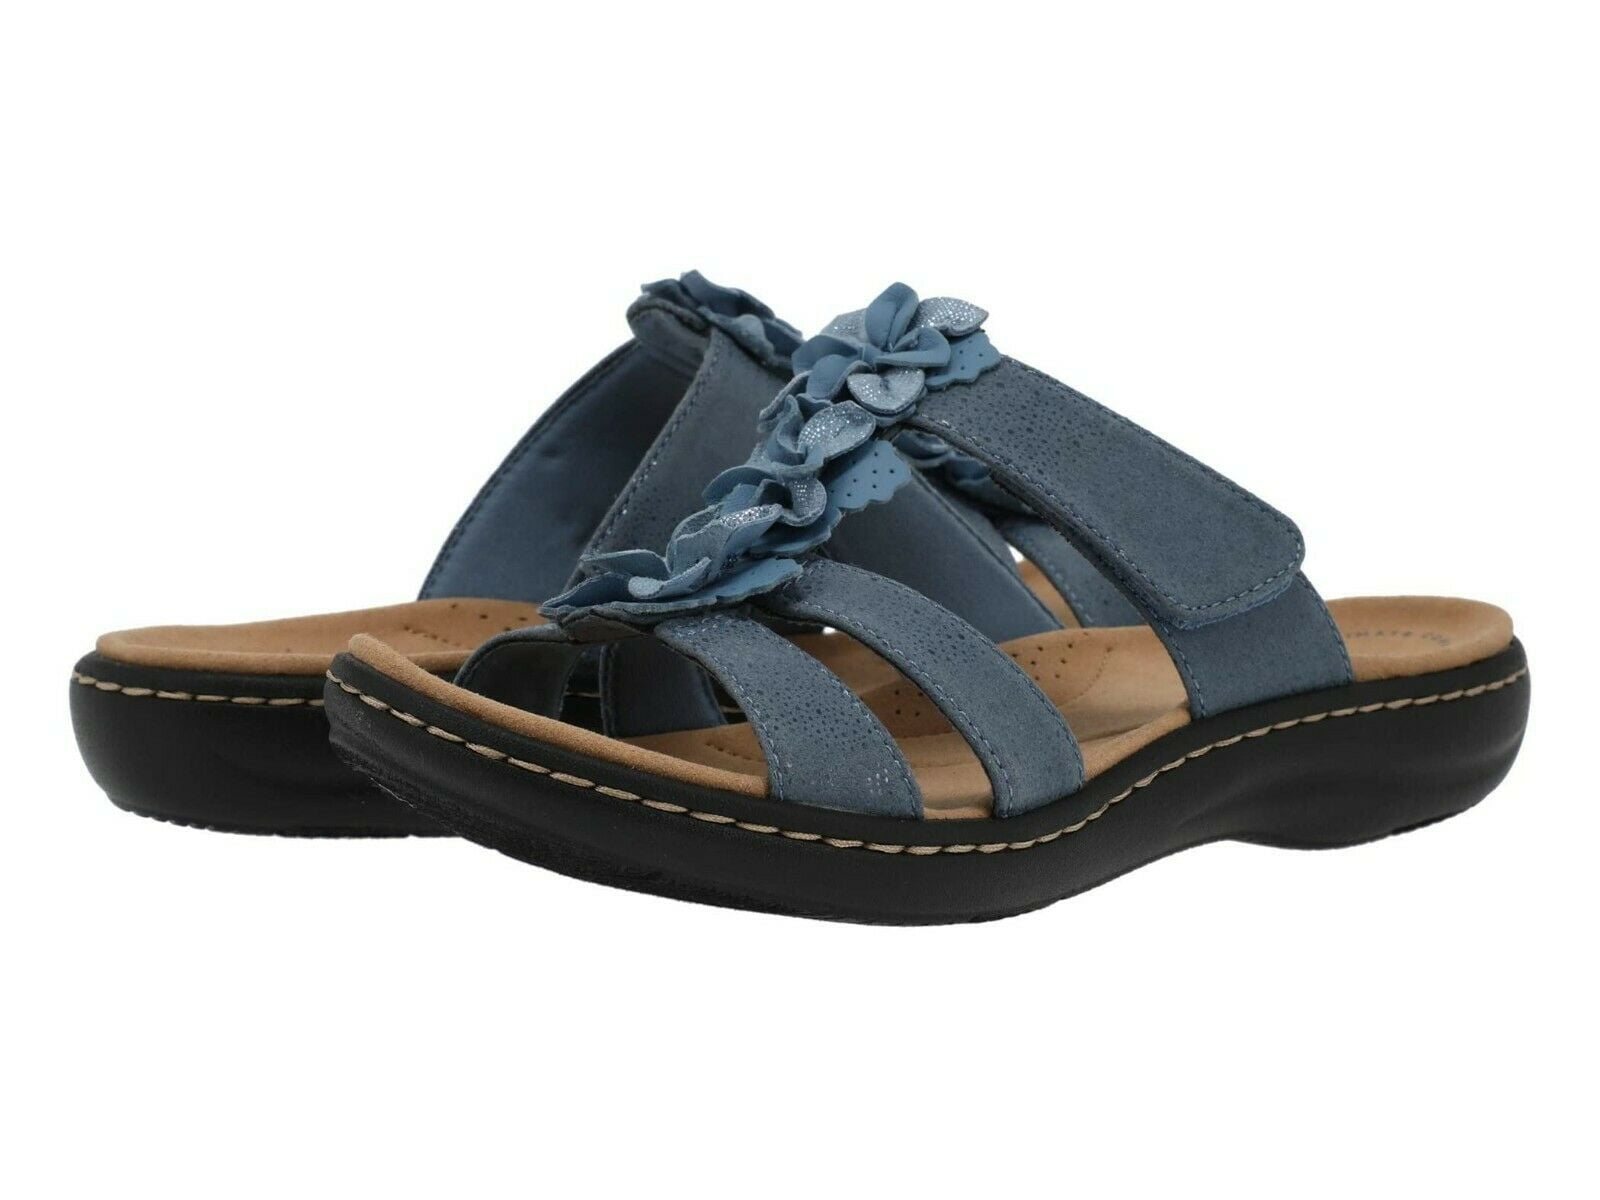 Clarks LEXI MYRTLE Womens Sand Leather 34220 Slide Comfort Sandals 